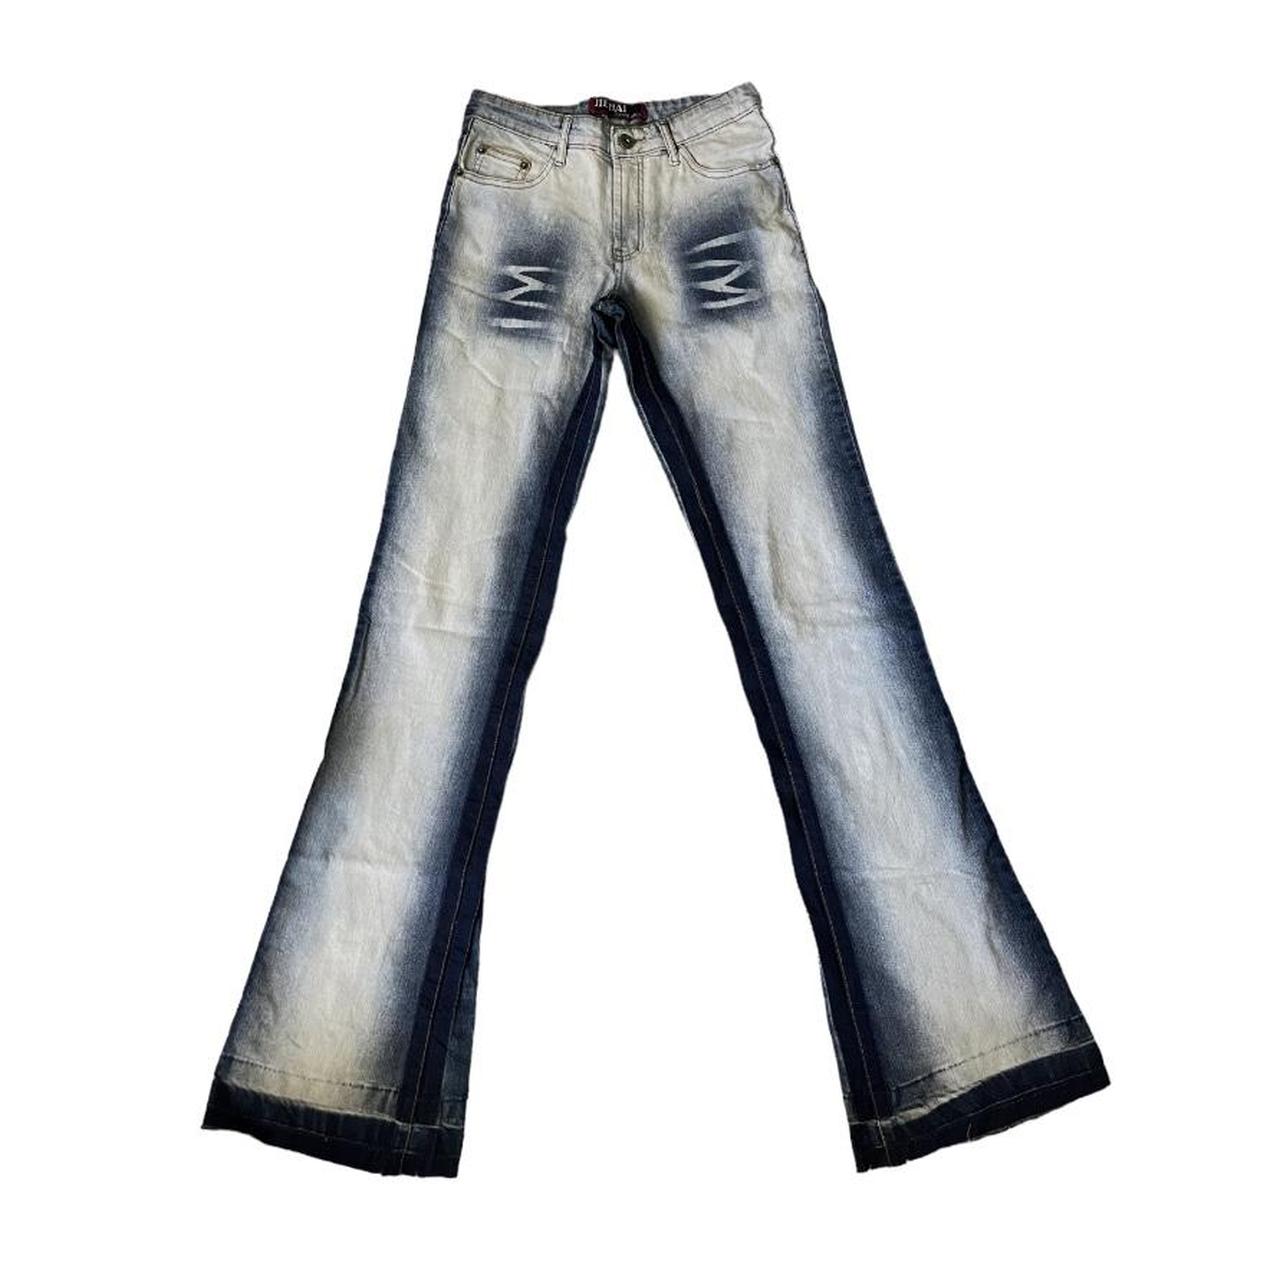 insane y2k flared vintage jeans waist is 26 in - Depop